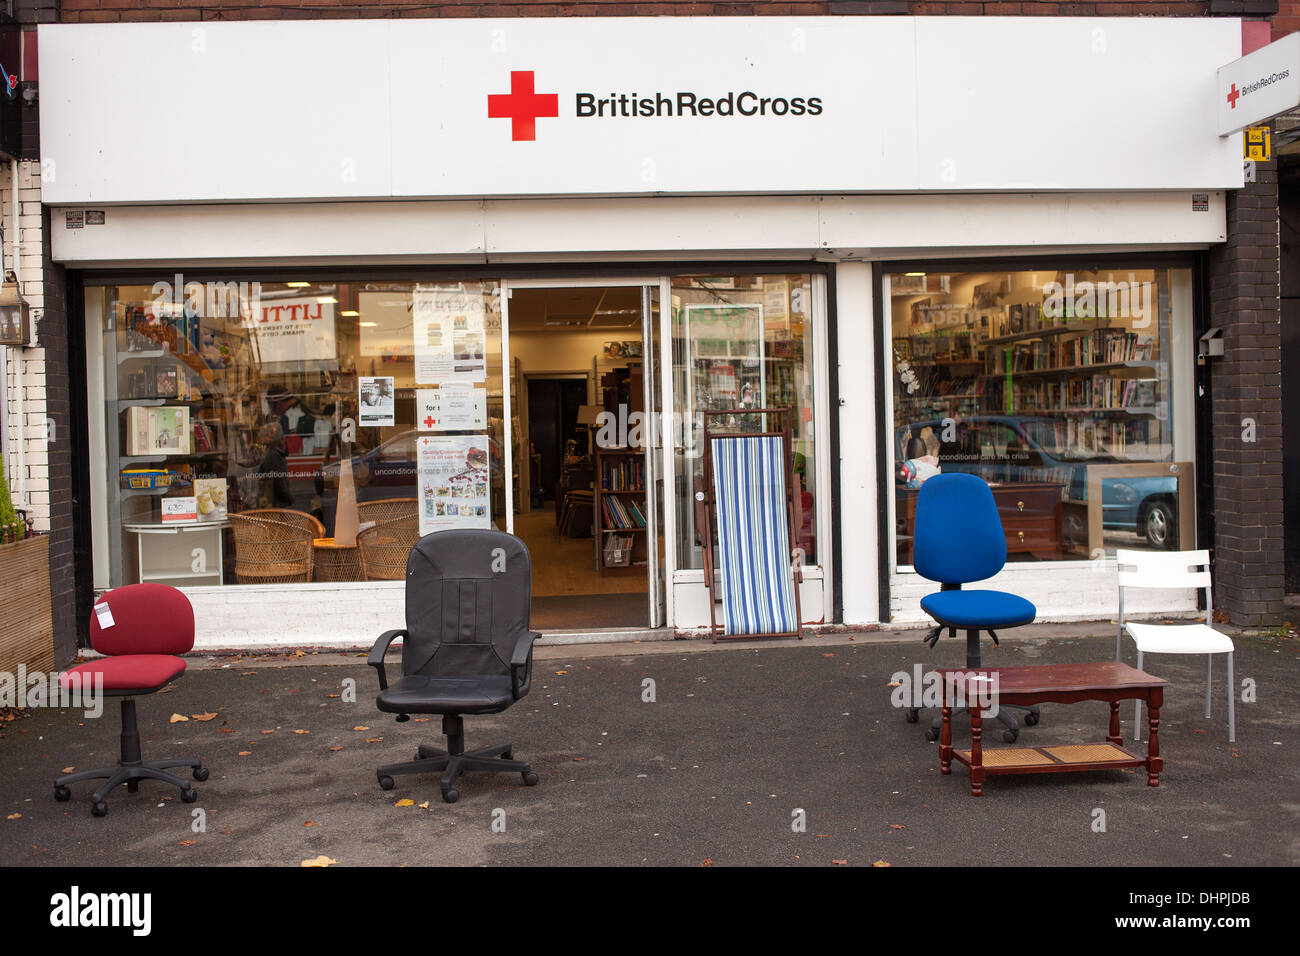 Encyclopedia plasticitet skud The British Red Cross charity shop on Wilbraham Road , Chorlton , Manchester  Stock Photo - Alamy